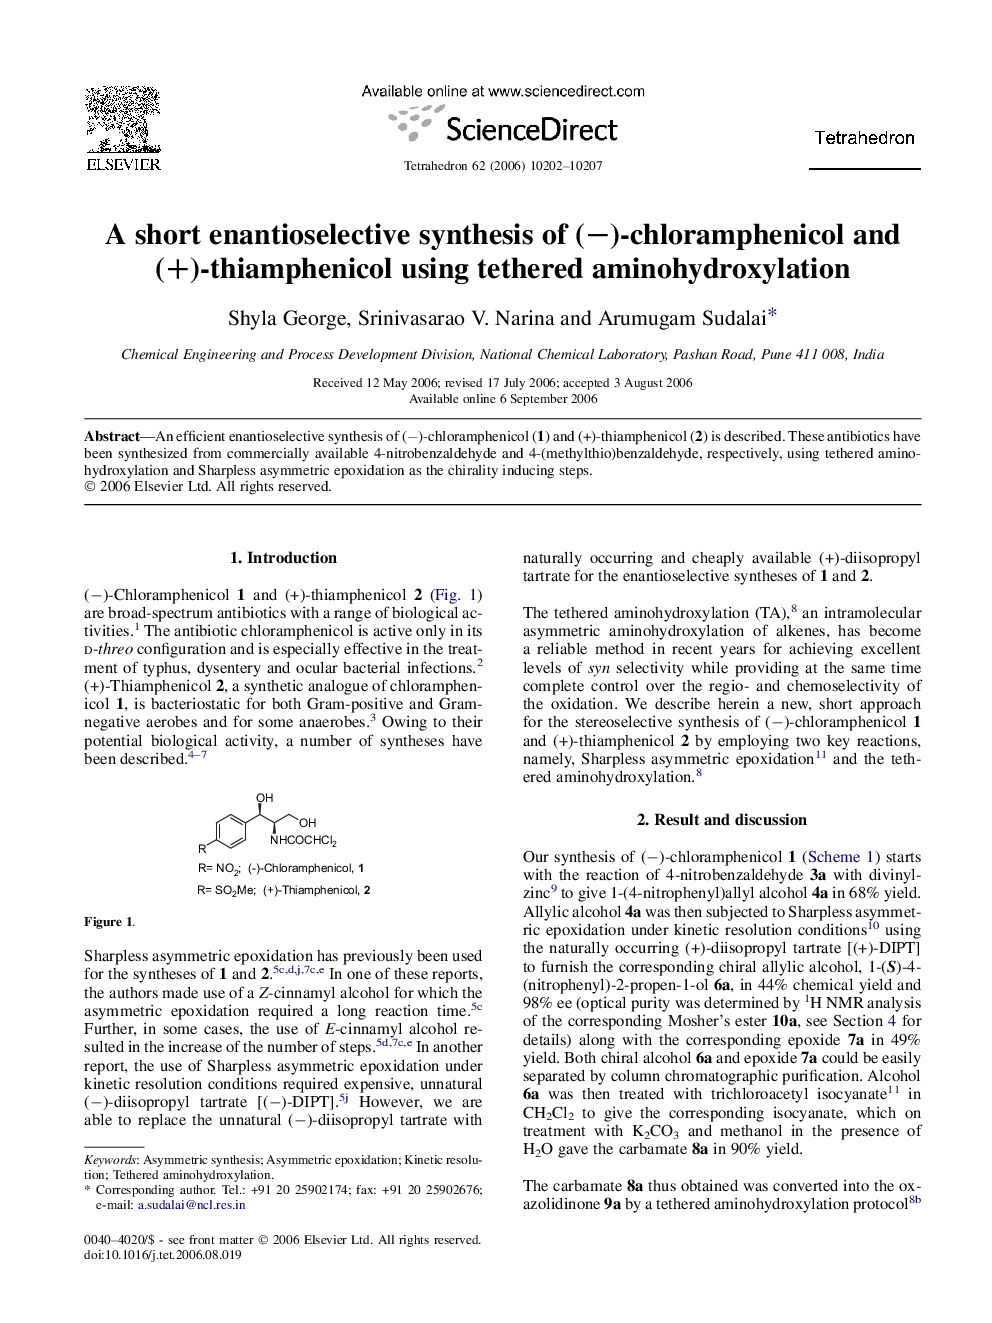 A short enantioselective synthesis of (â)-chloramphenicol and (+)-thiamphenicol using tethered aminohydroxylation